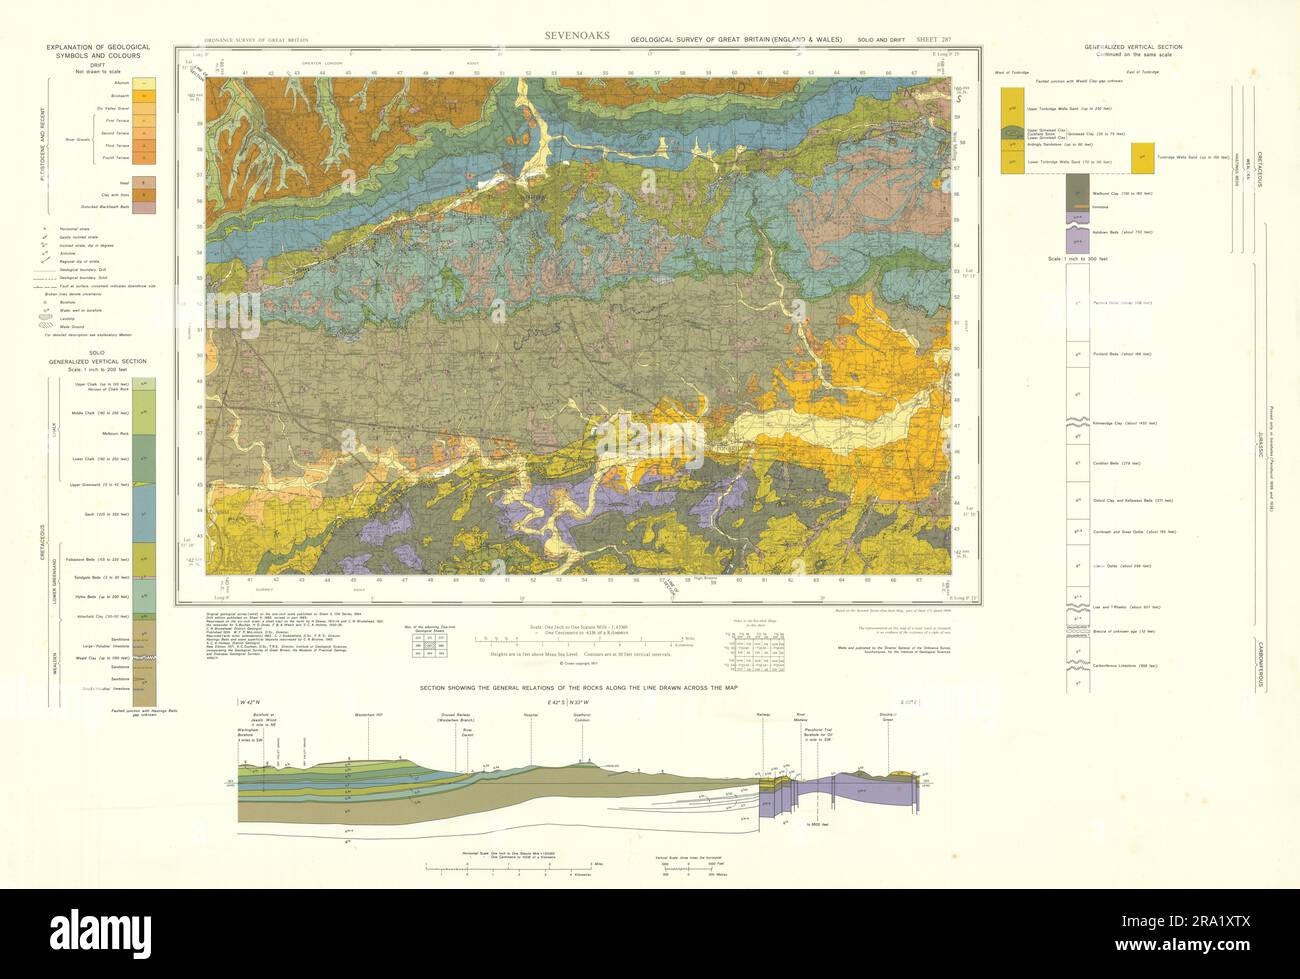 Sevenoaks Geological Survey sheet 287 High Weald North Downs Tonbridge 1971 MAP Foto Stock